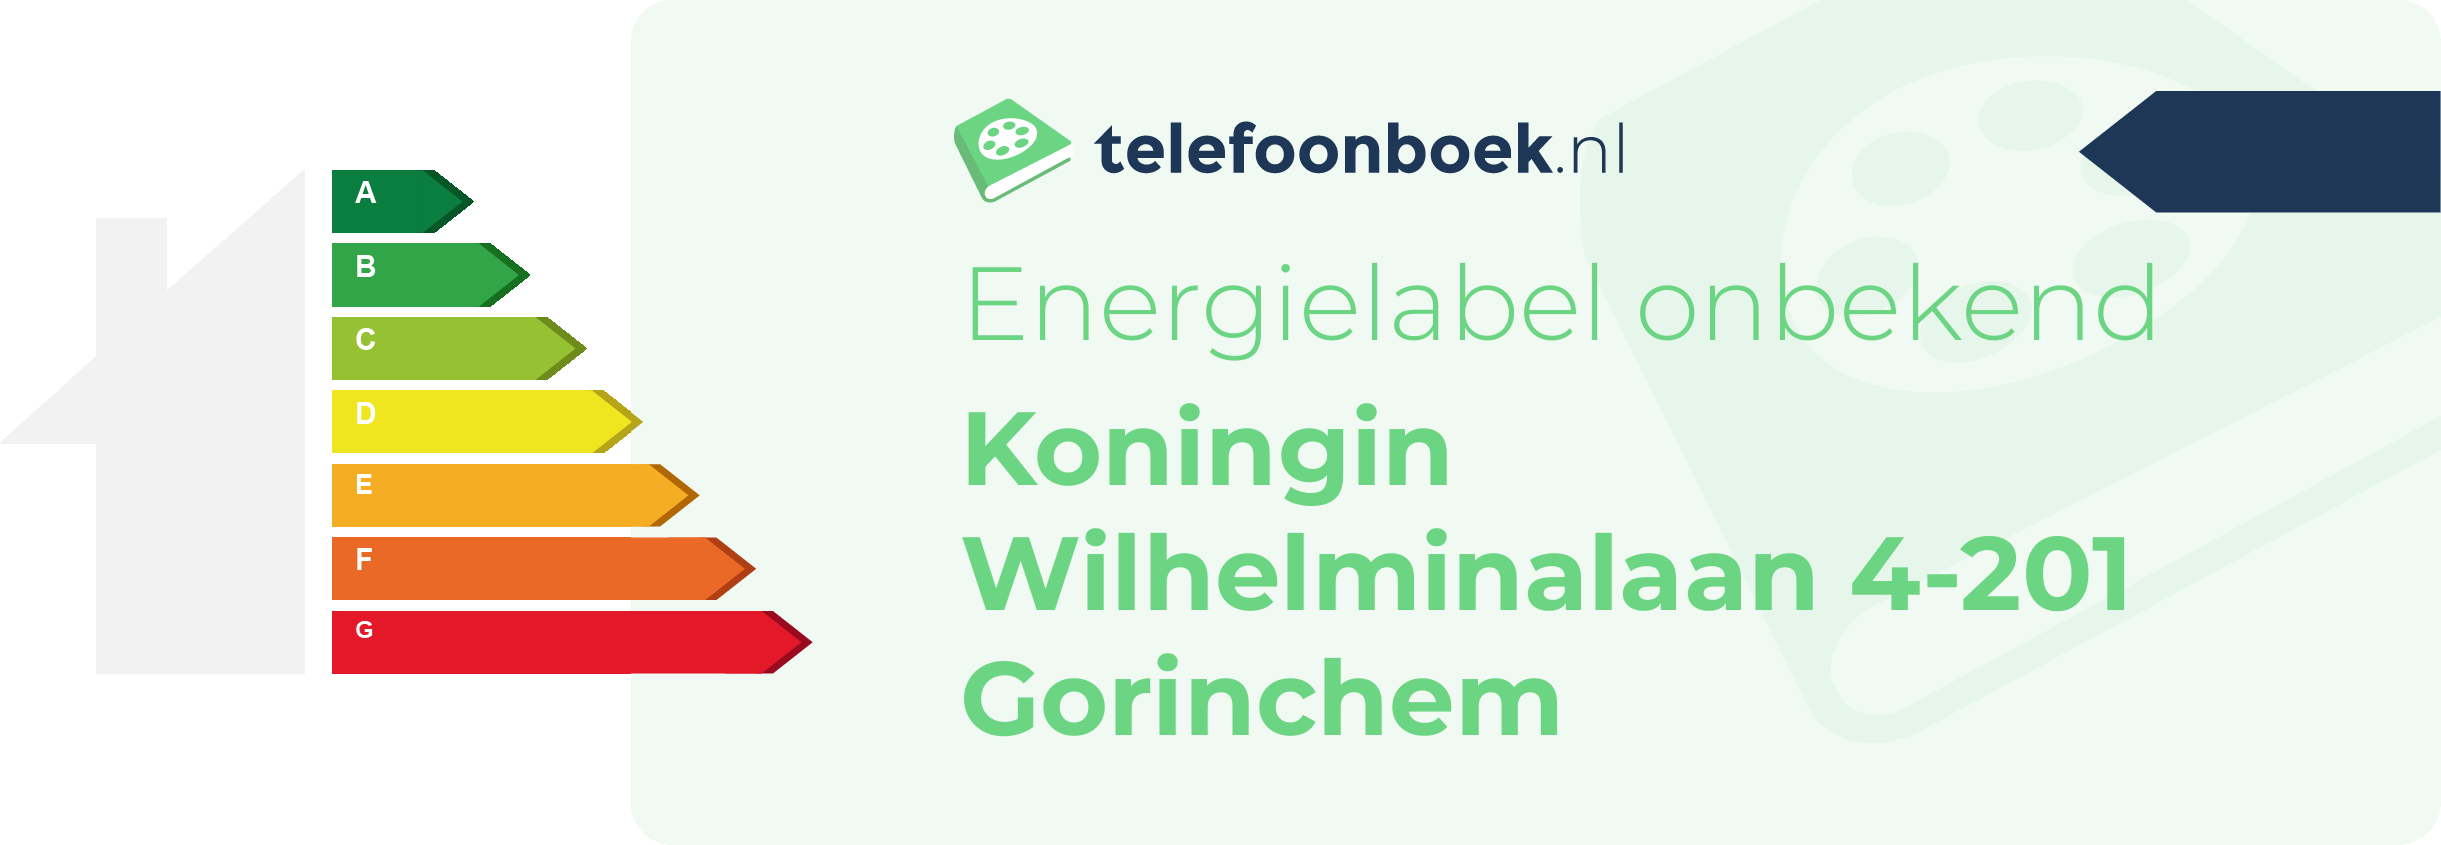 Energielabel Koningin Wilhelminalaan 4-201 Gorinchem